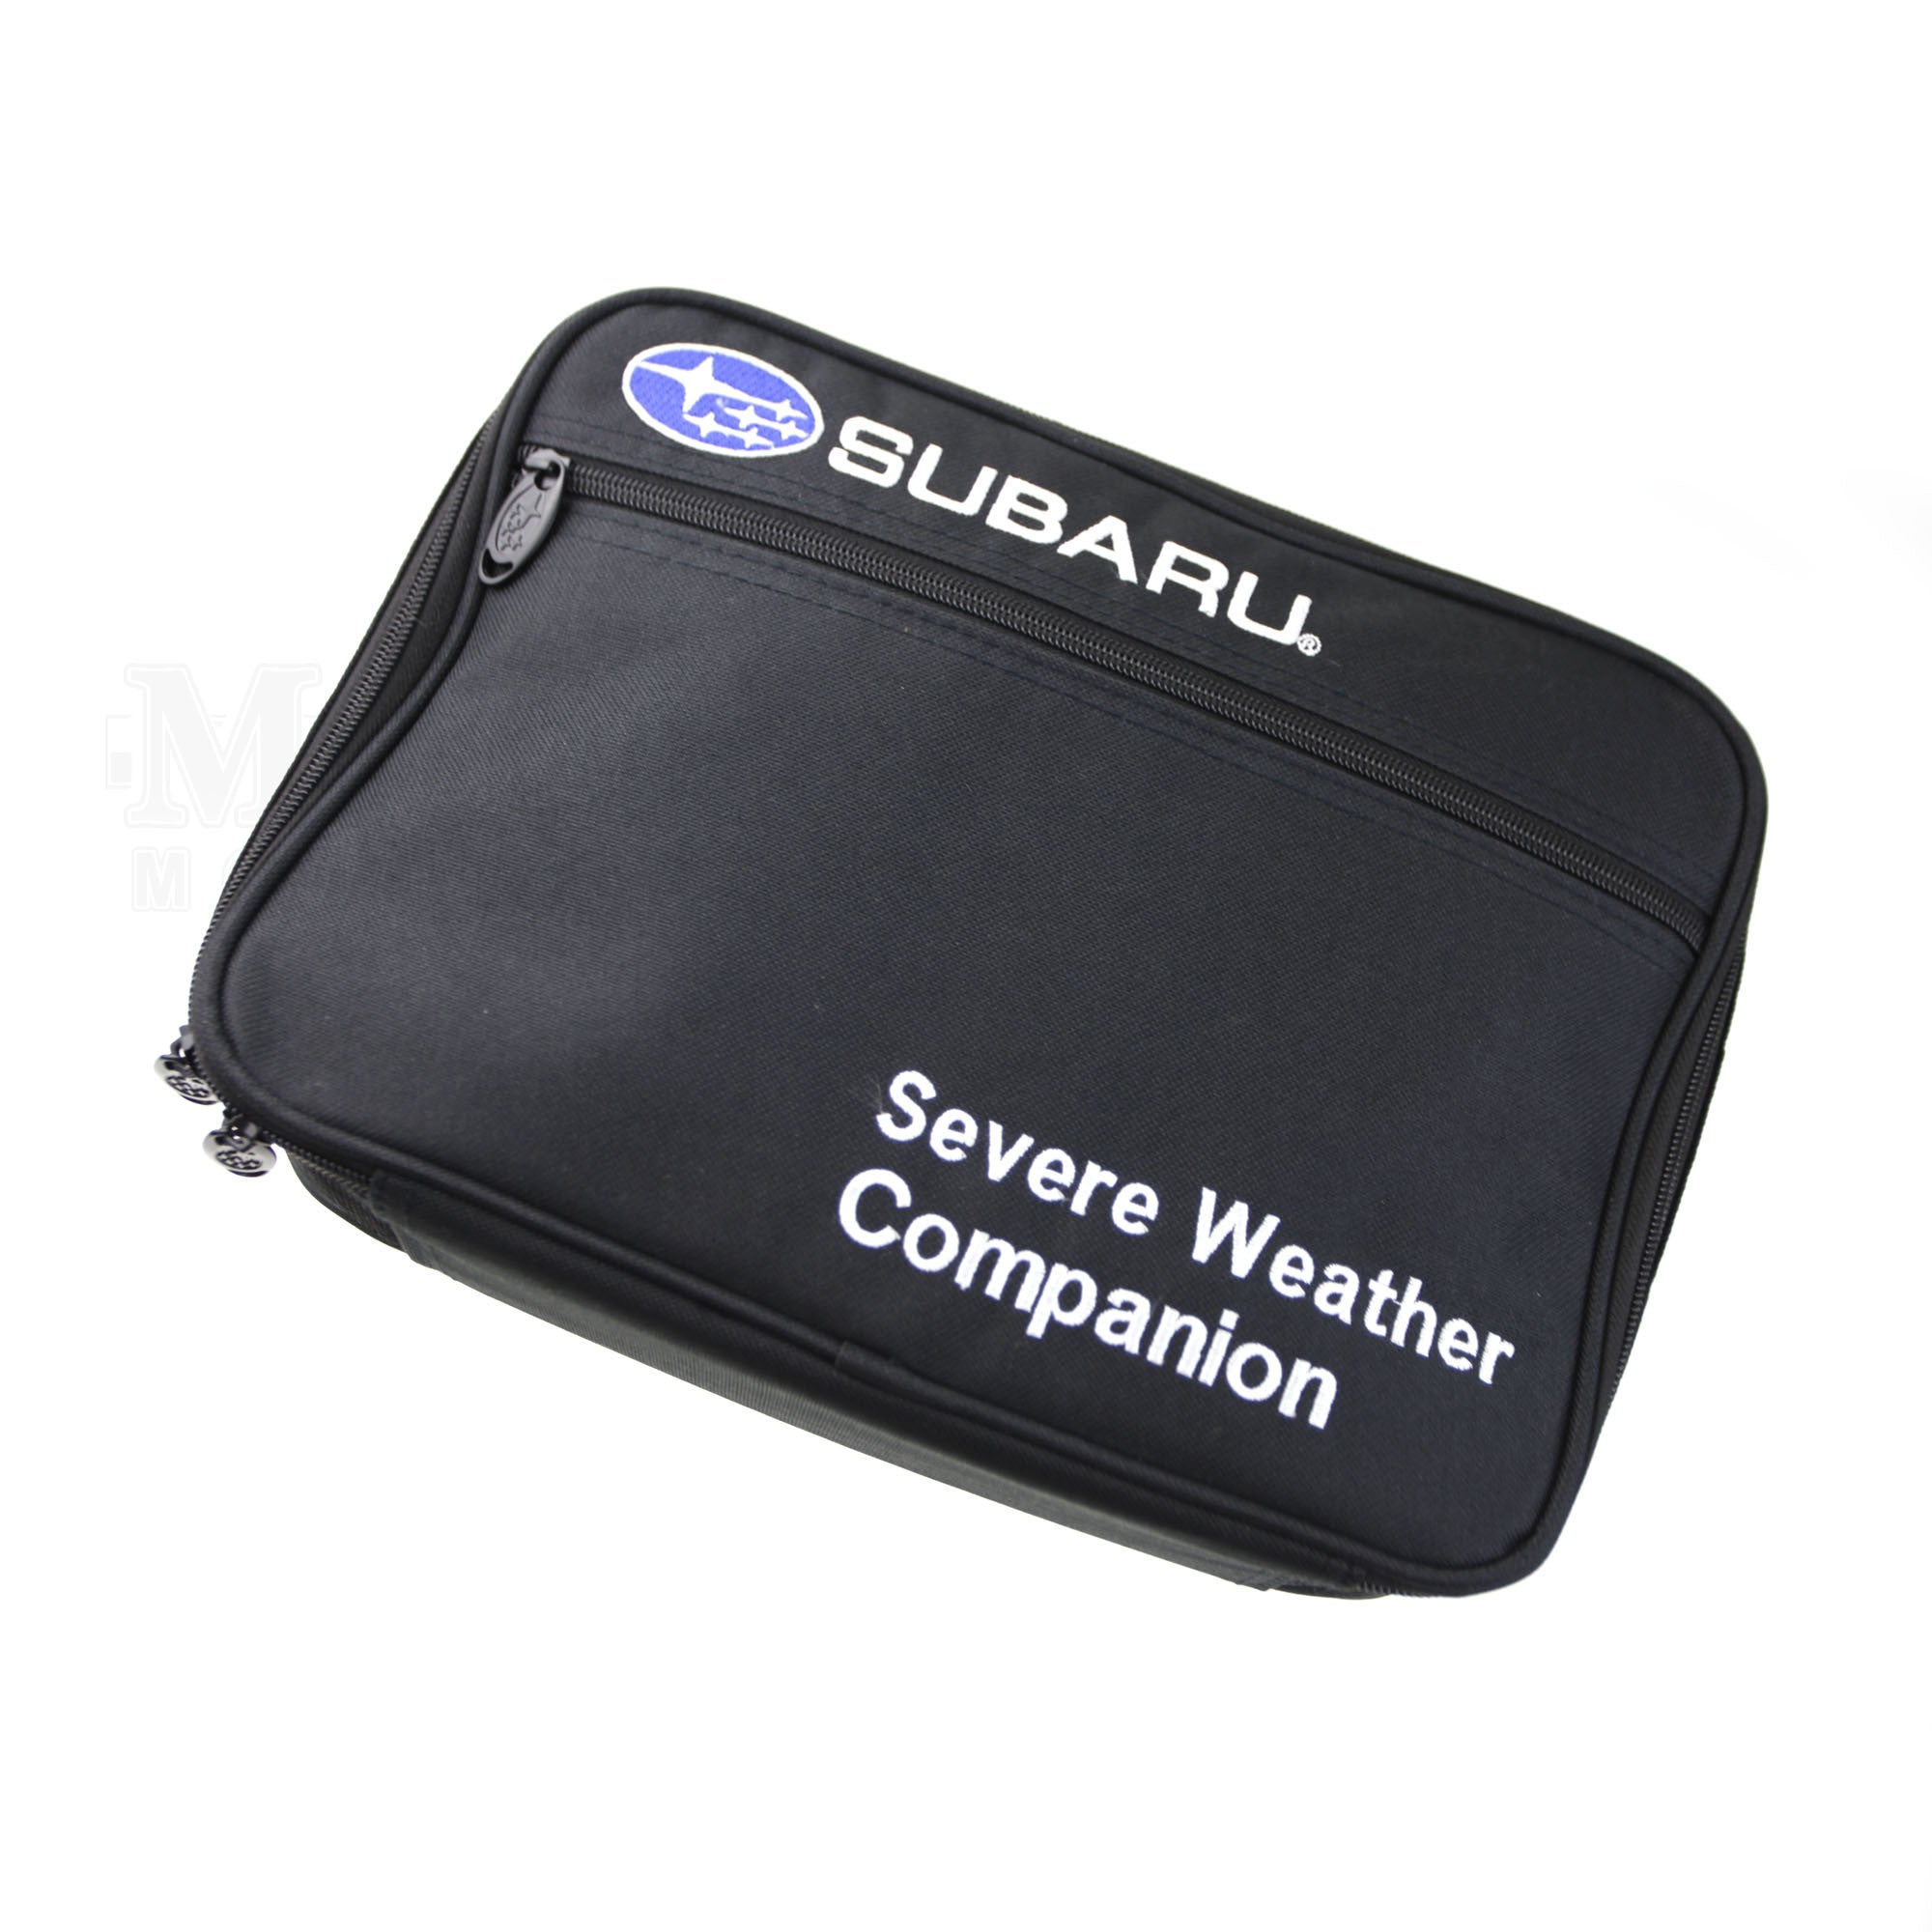 Subaru Severe Weather Companion Kit